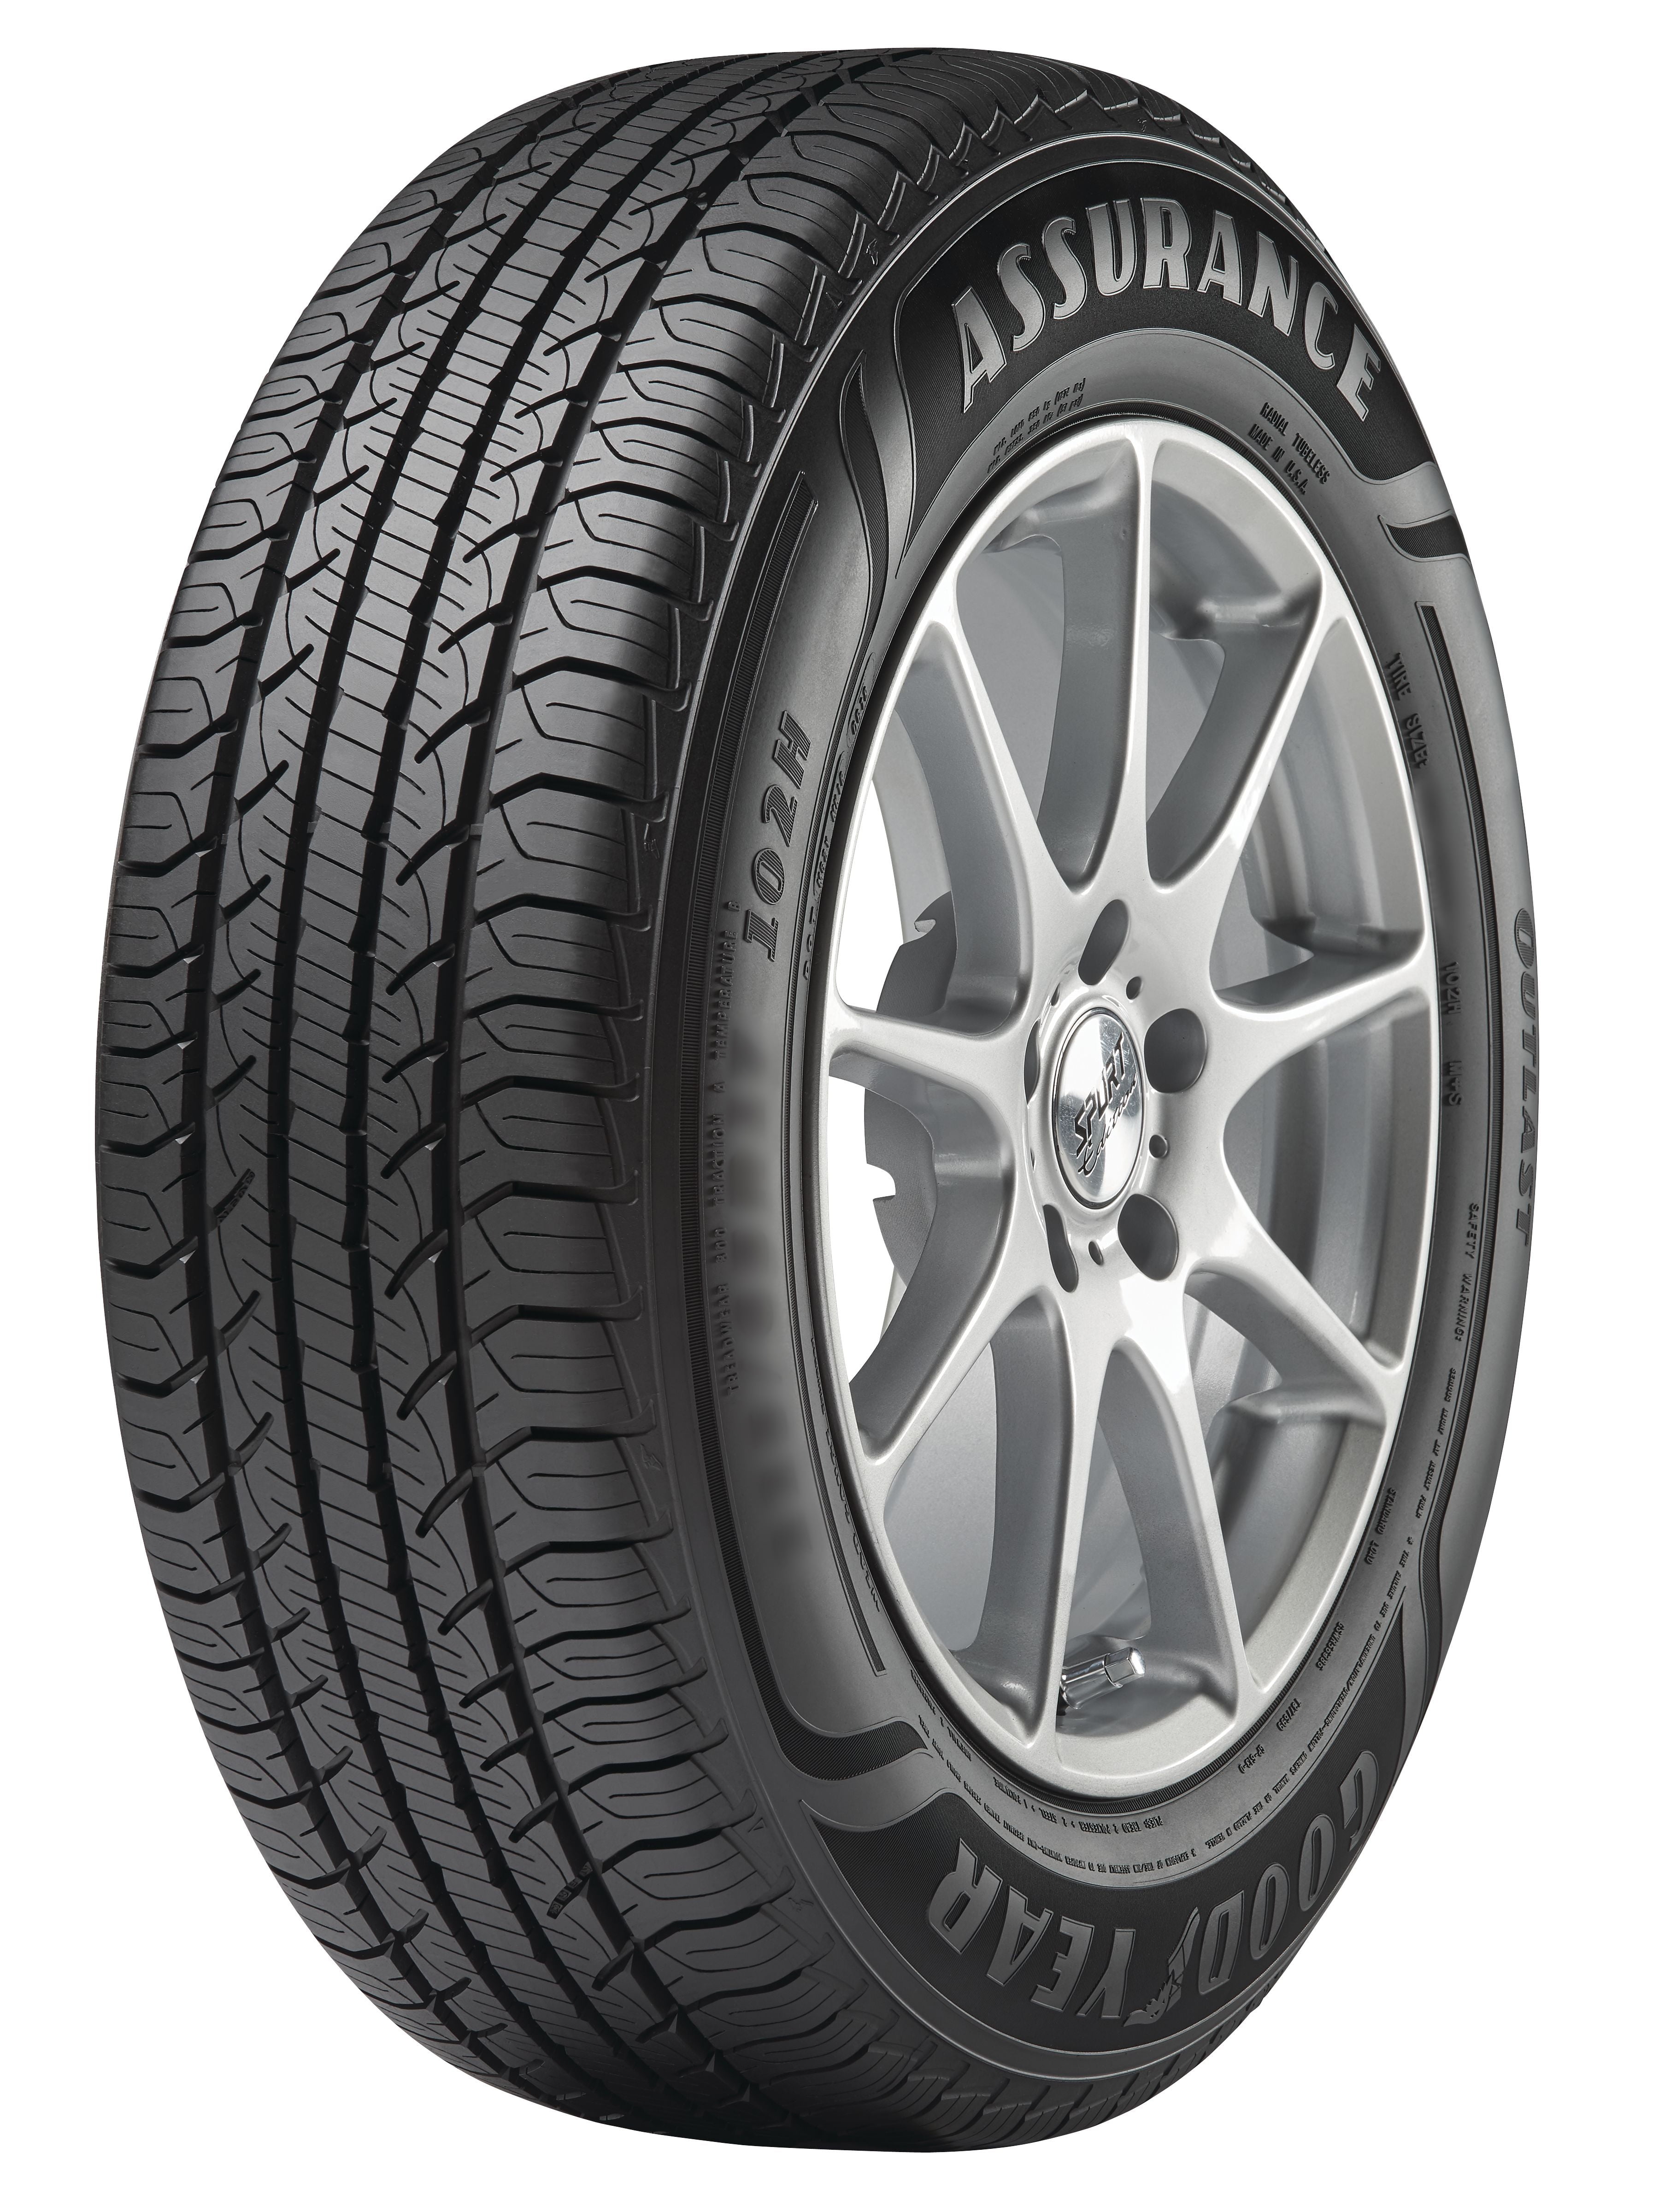 Goodyear Assurance Outlast 215/60R16 95V Tire All-Season